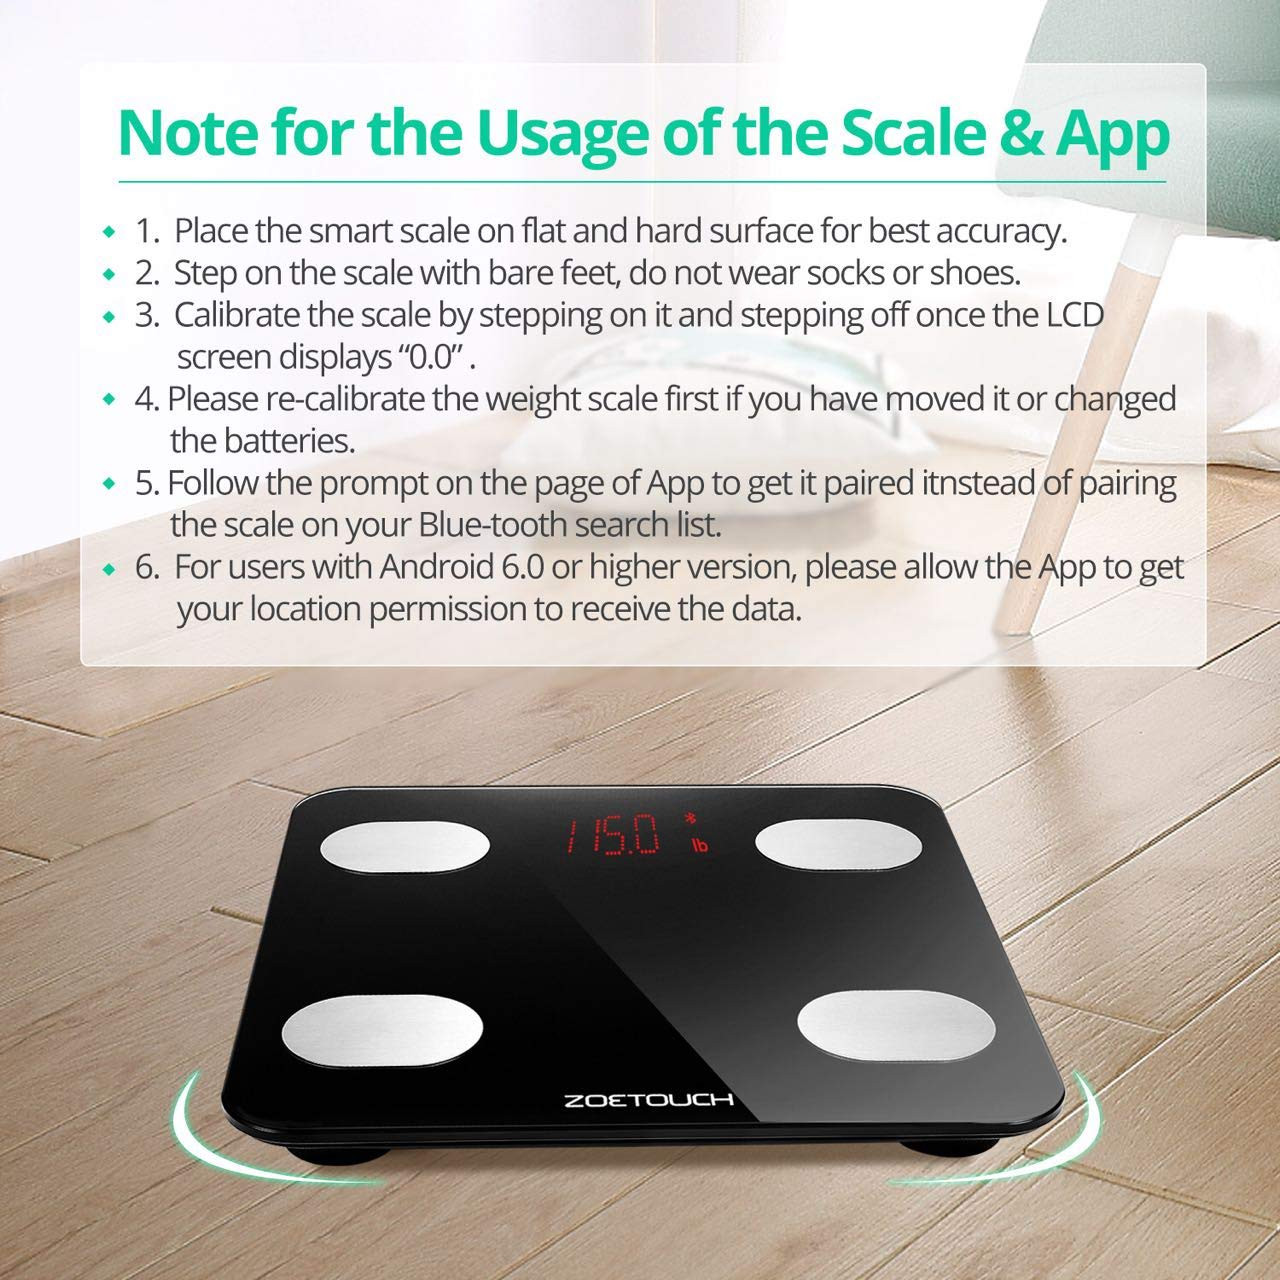 Bluetooth Smart Body Fat Scale WONGKUO 24 Key Body Composition Monitor  Wireless Digital Bathroom Weight Scale